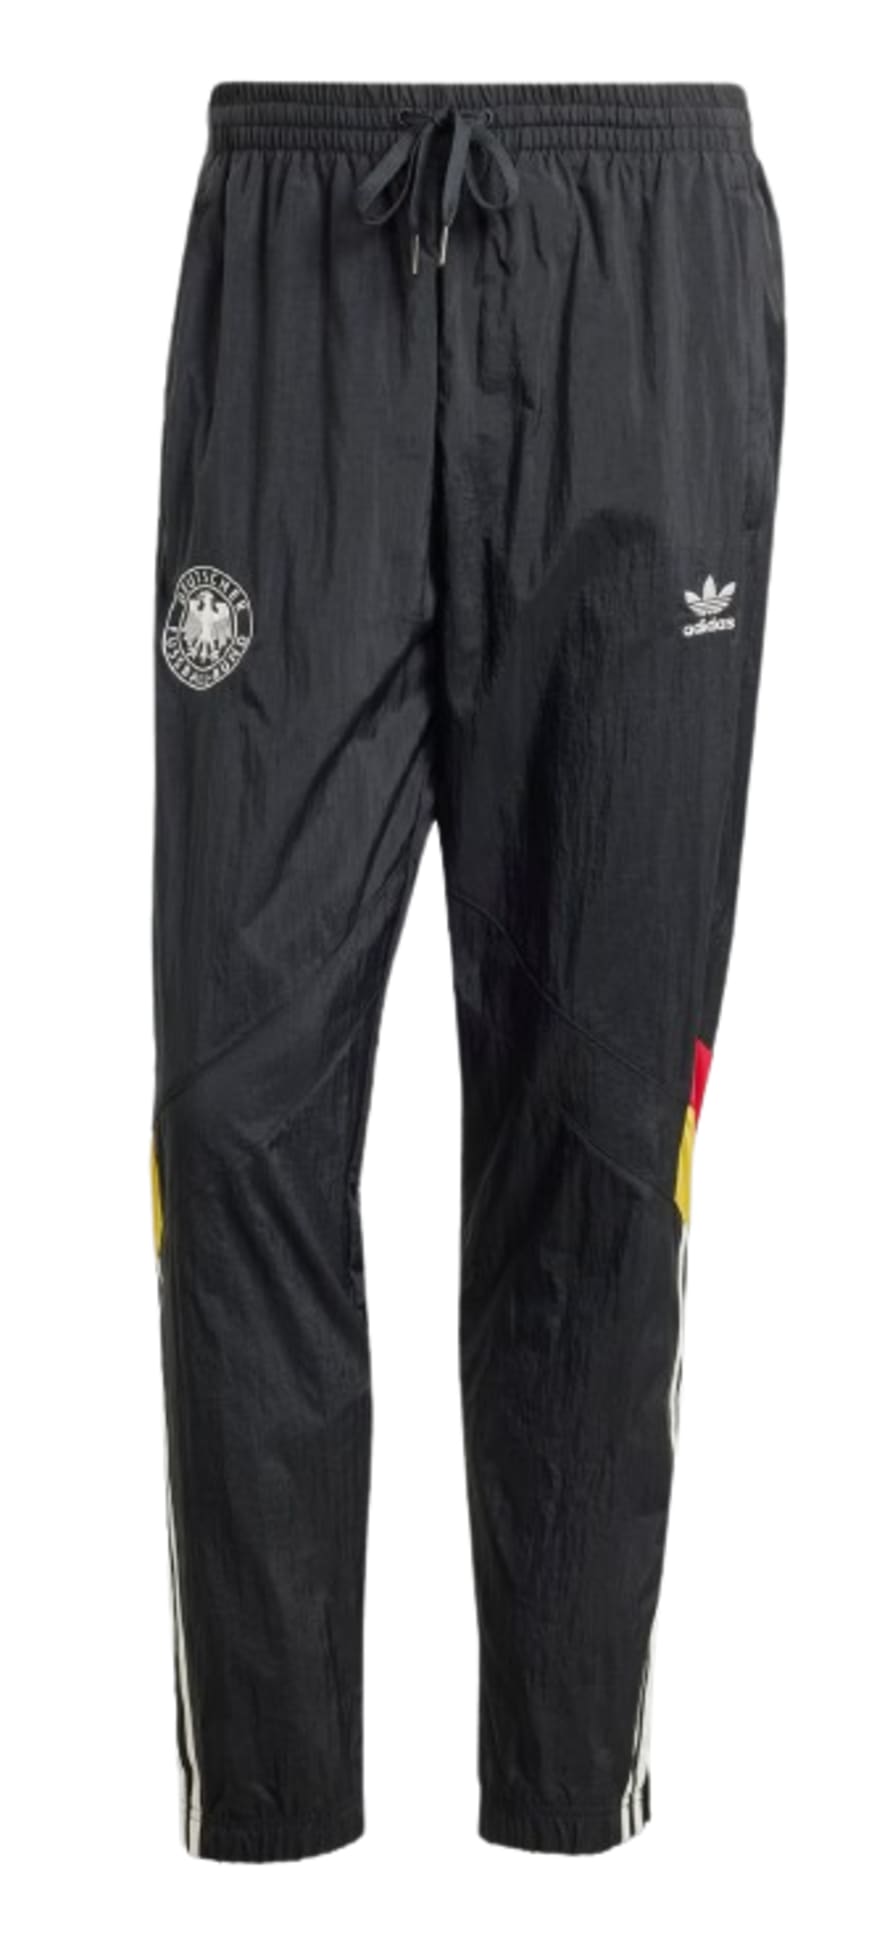 Adidas Dbf Og Pants Black